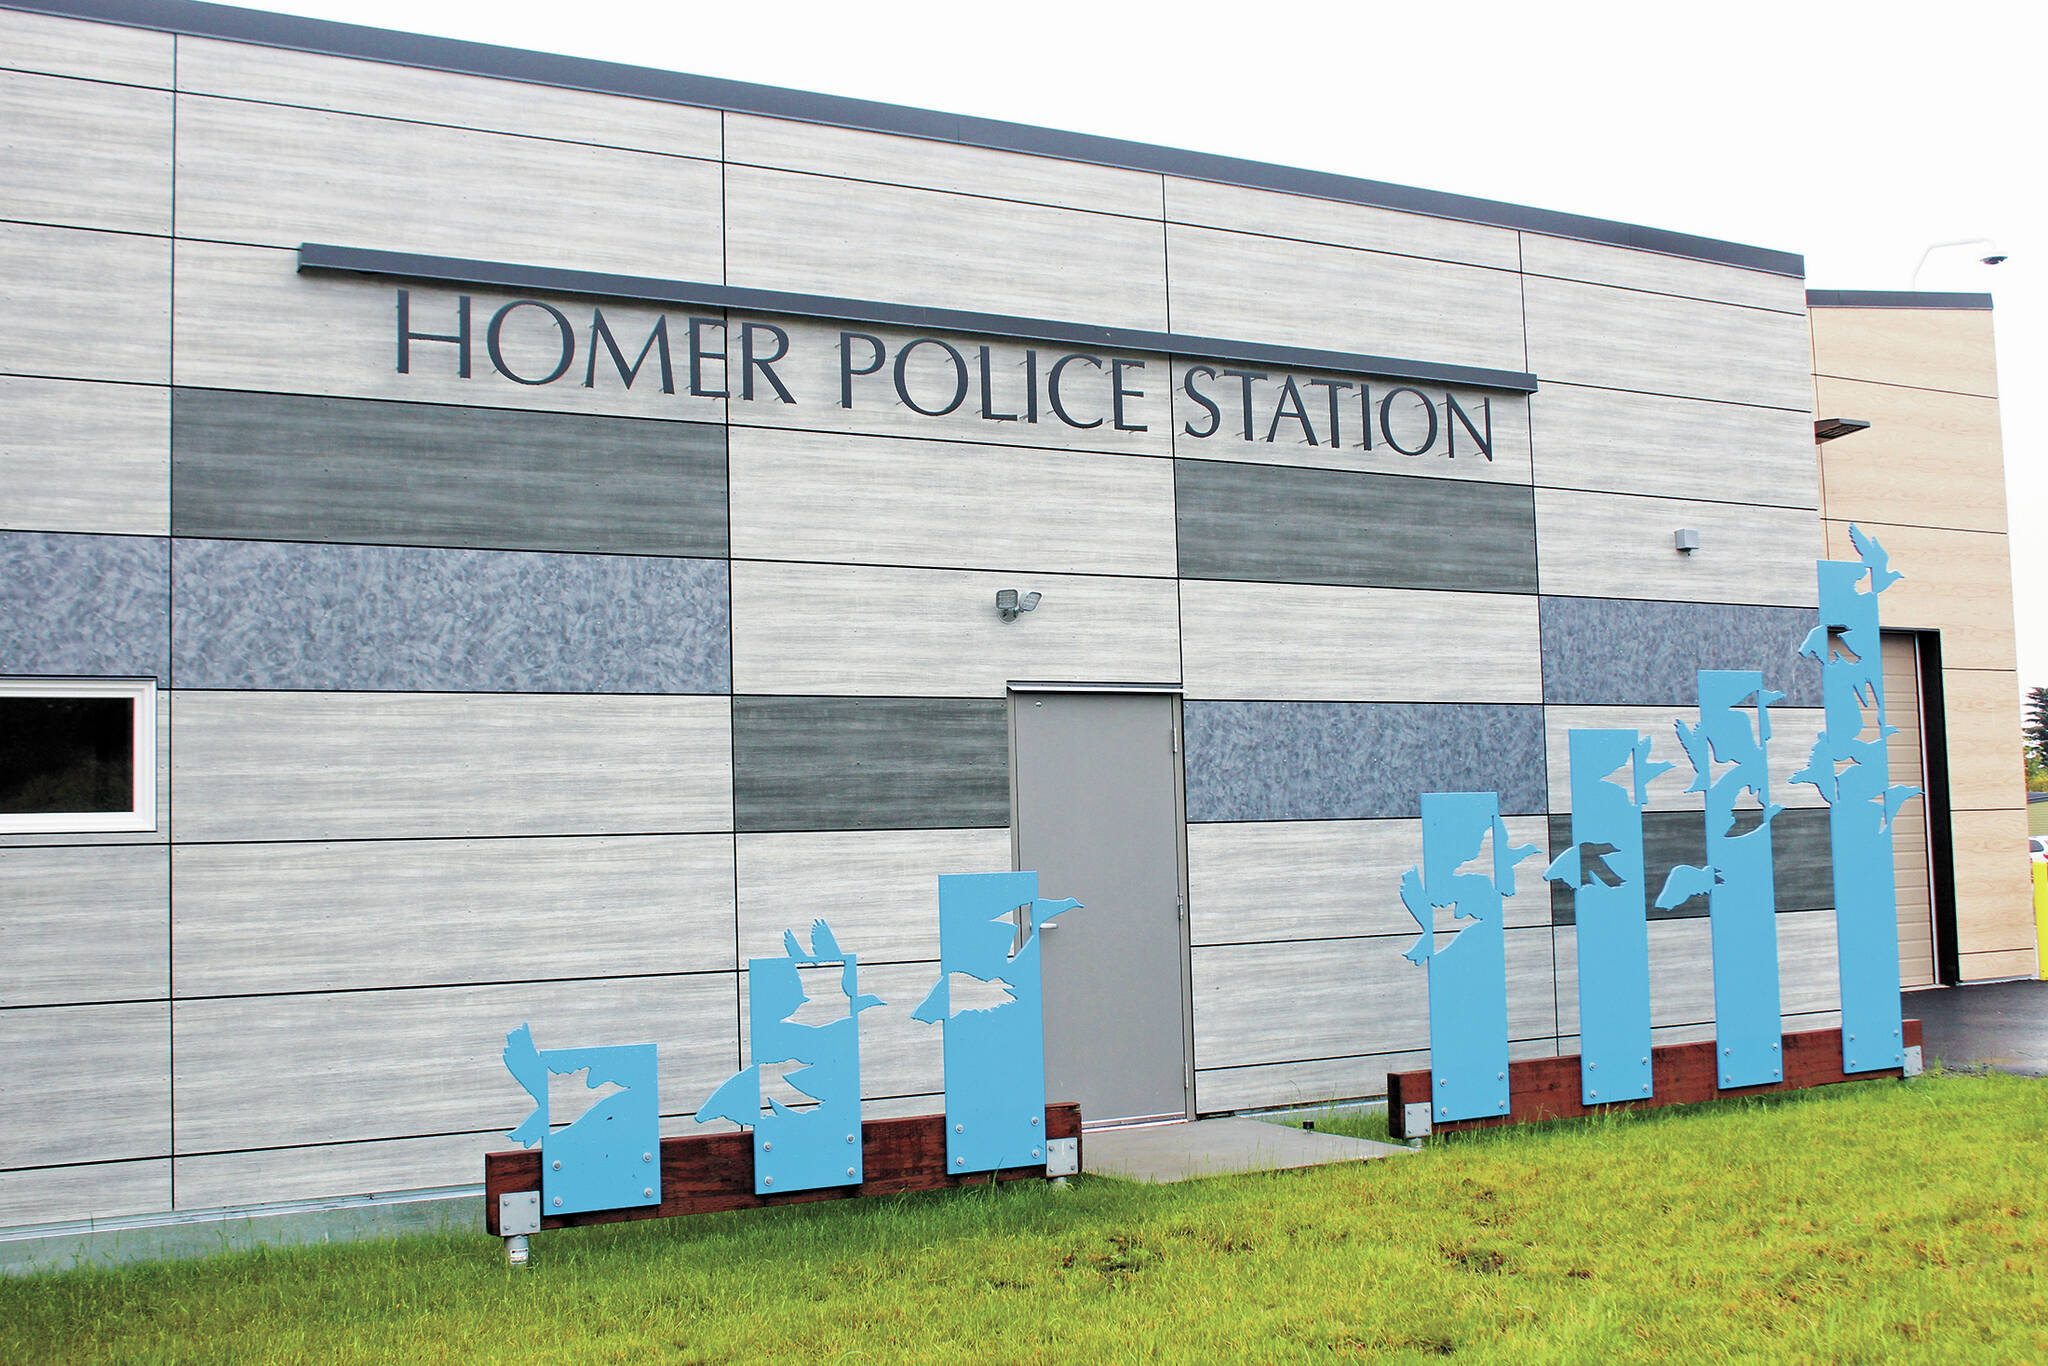 The Homer Police Station as seen Thursday, Sept. 24, 2020 in Homer, Alaska. (Photo by Megan Pacer/Homer News)